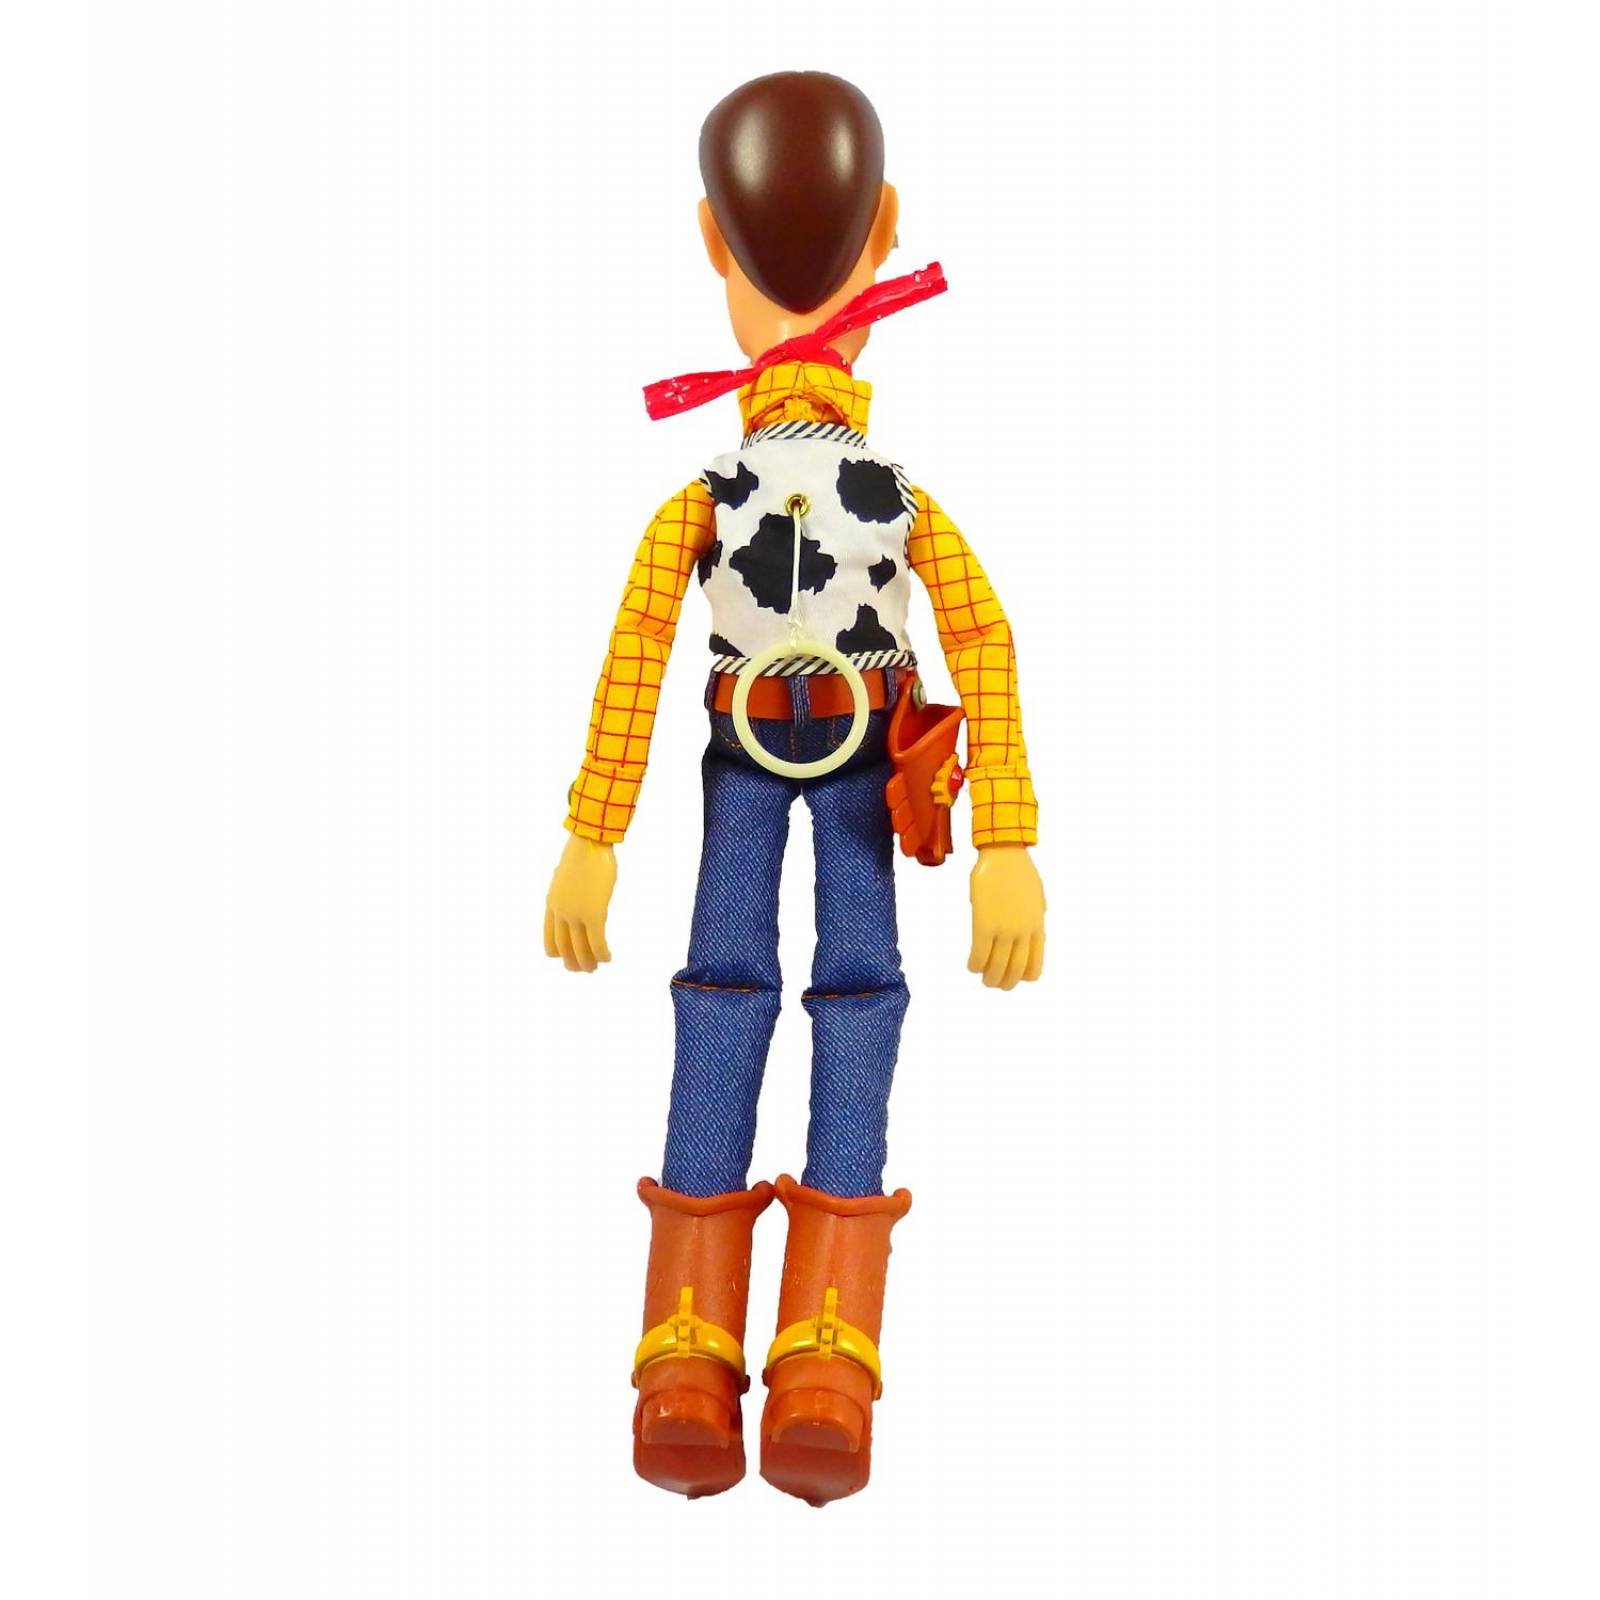 Woody parlant 40 cm